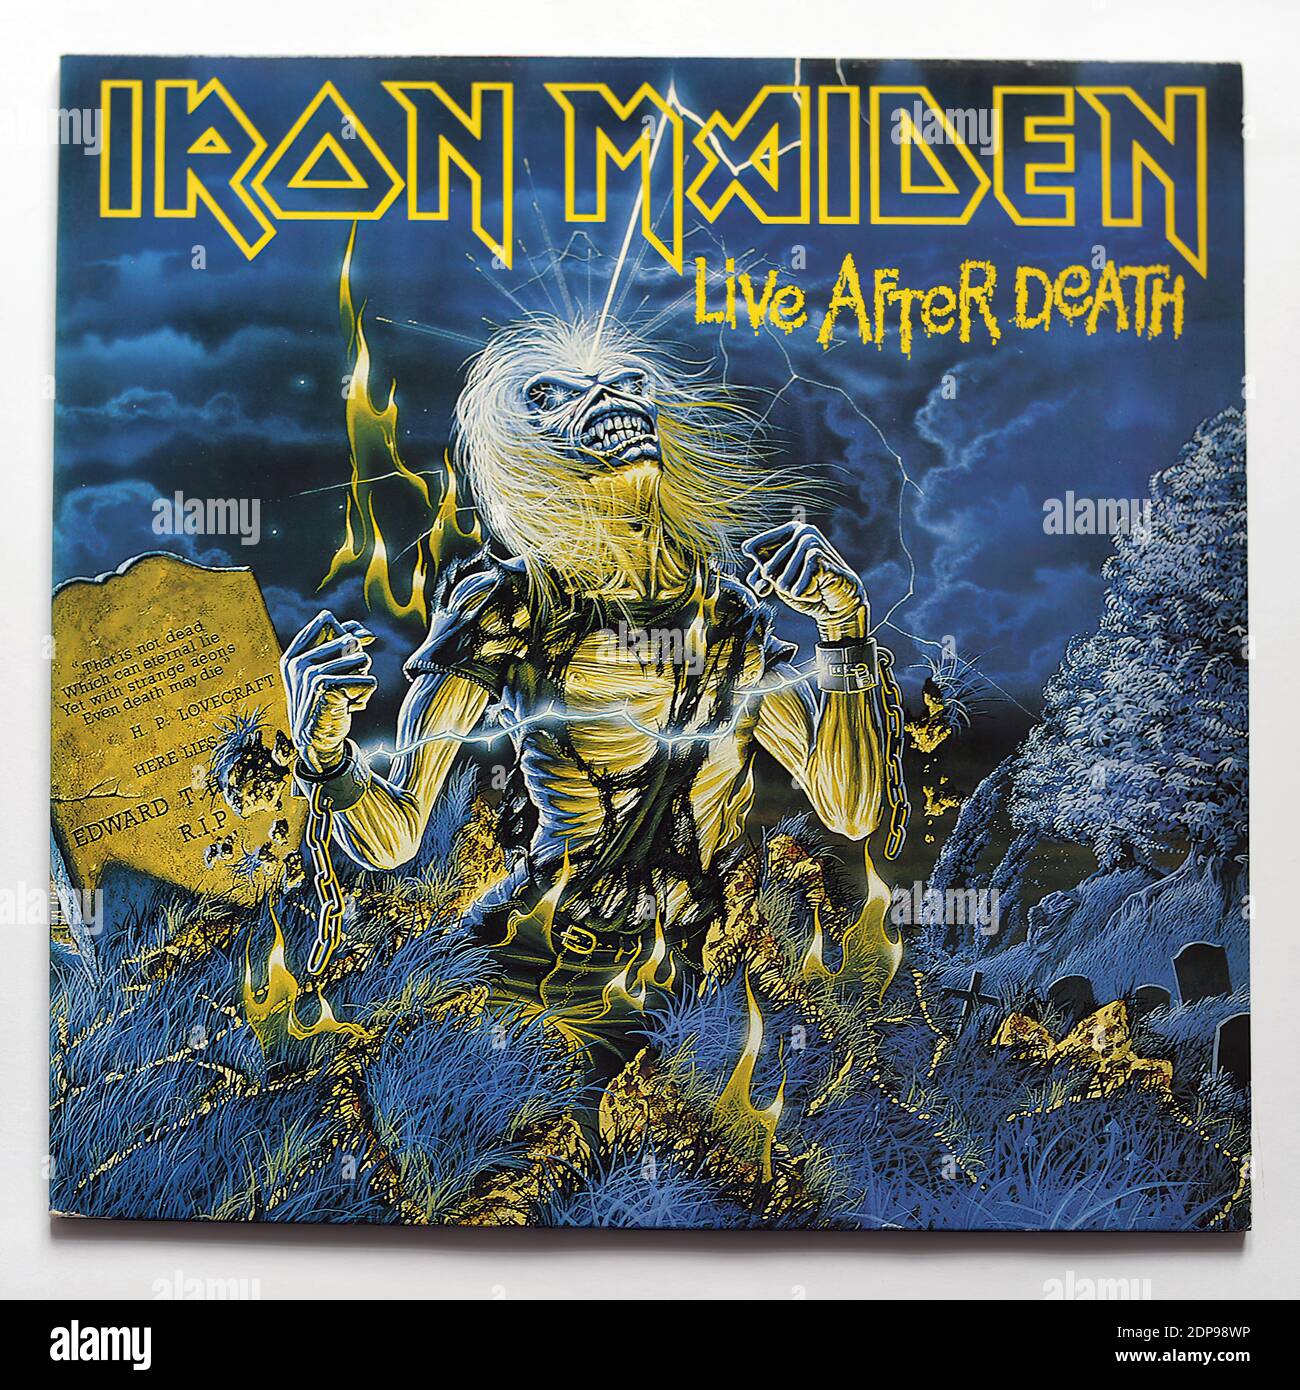 IRON MAIDEN Live After Death - copertina vintage in vinile Foto Stock